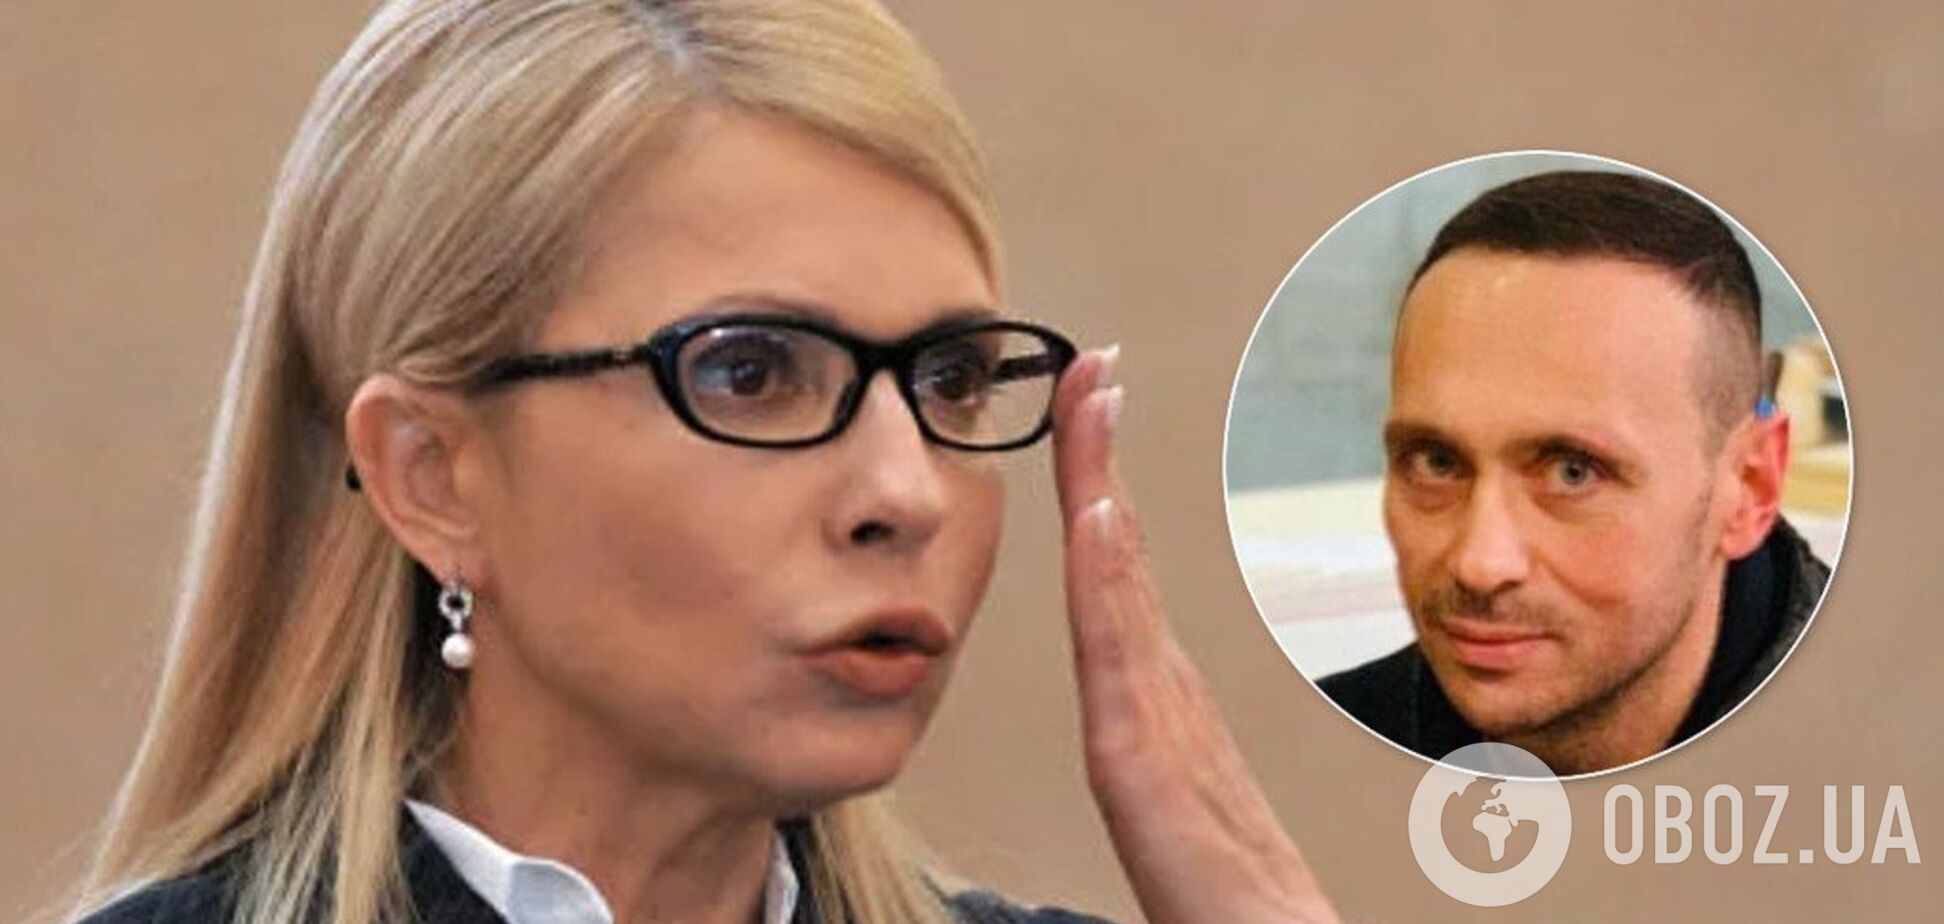 'Хороша': 'слуга народа' обсуждал в Раде 'свежую пластику' Тимошенко. Видео